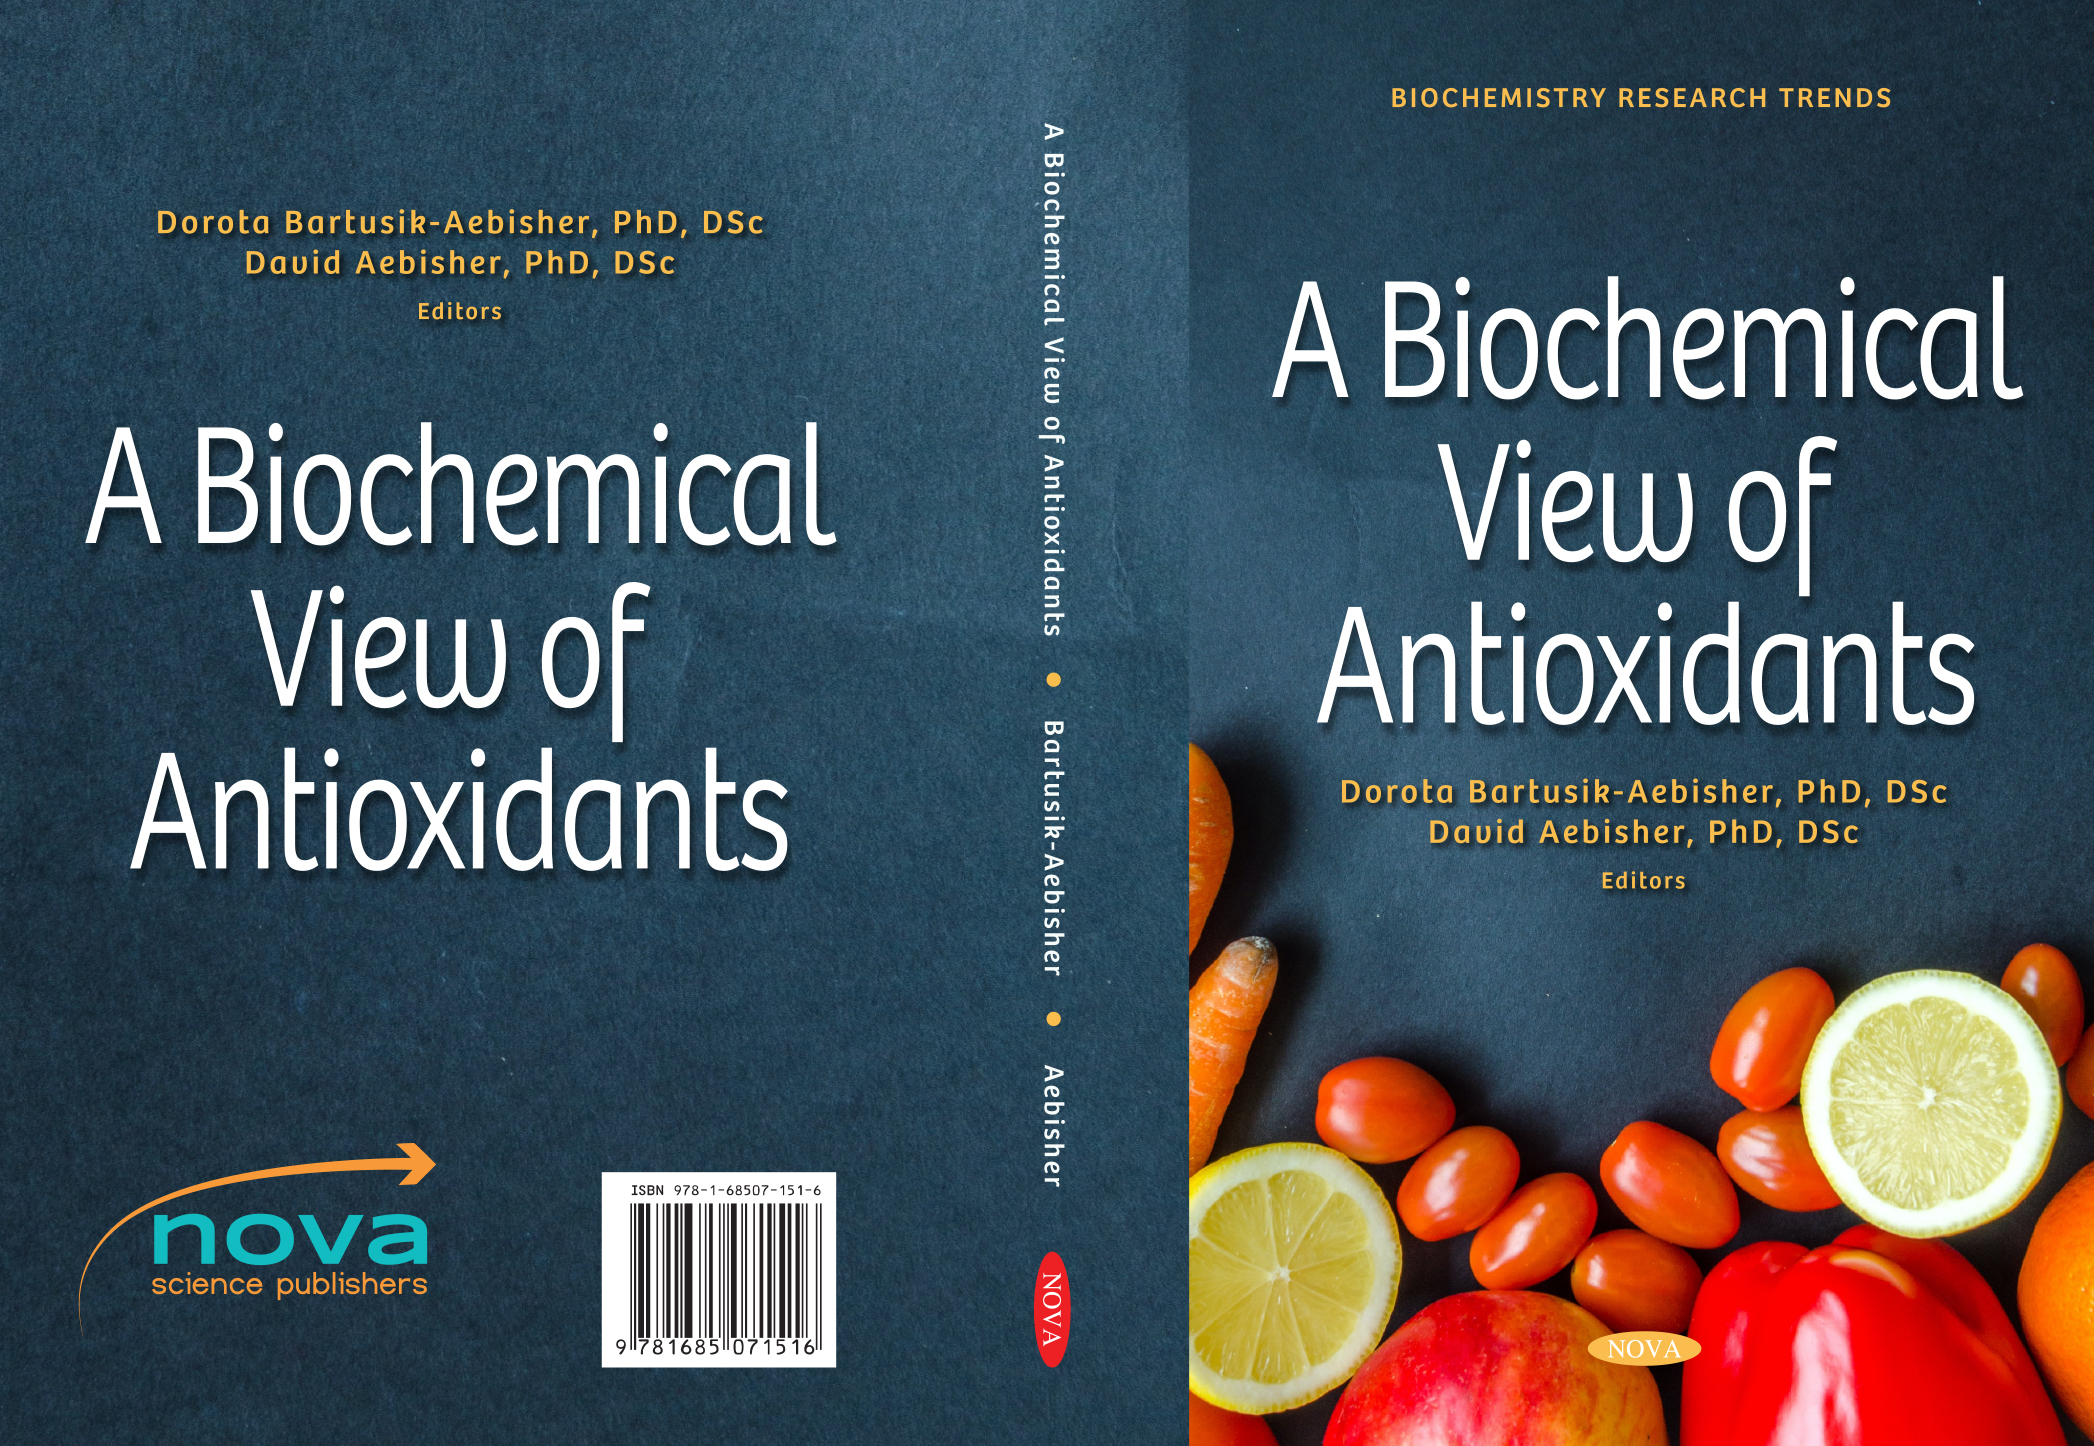 A Biochemical View of Antioxidants 978-1-68507-151-6 (1).jpg [2.21 MB]